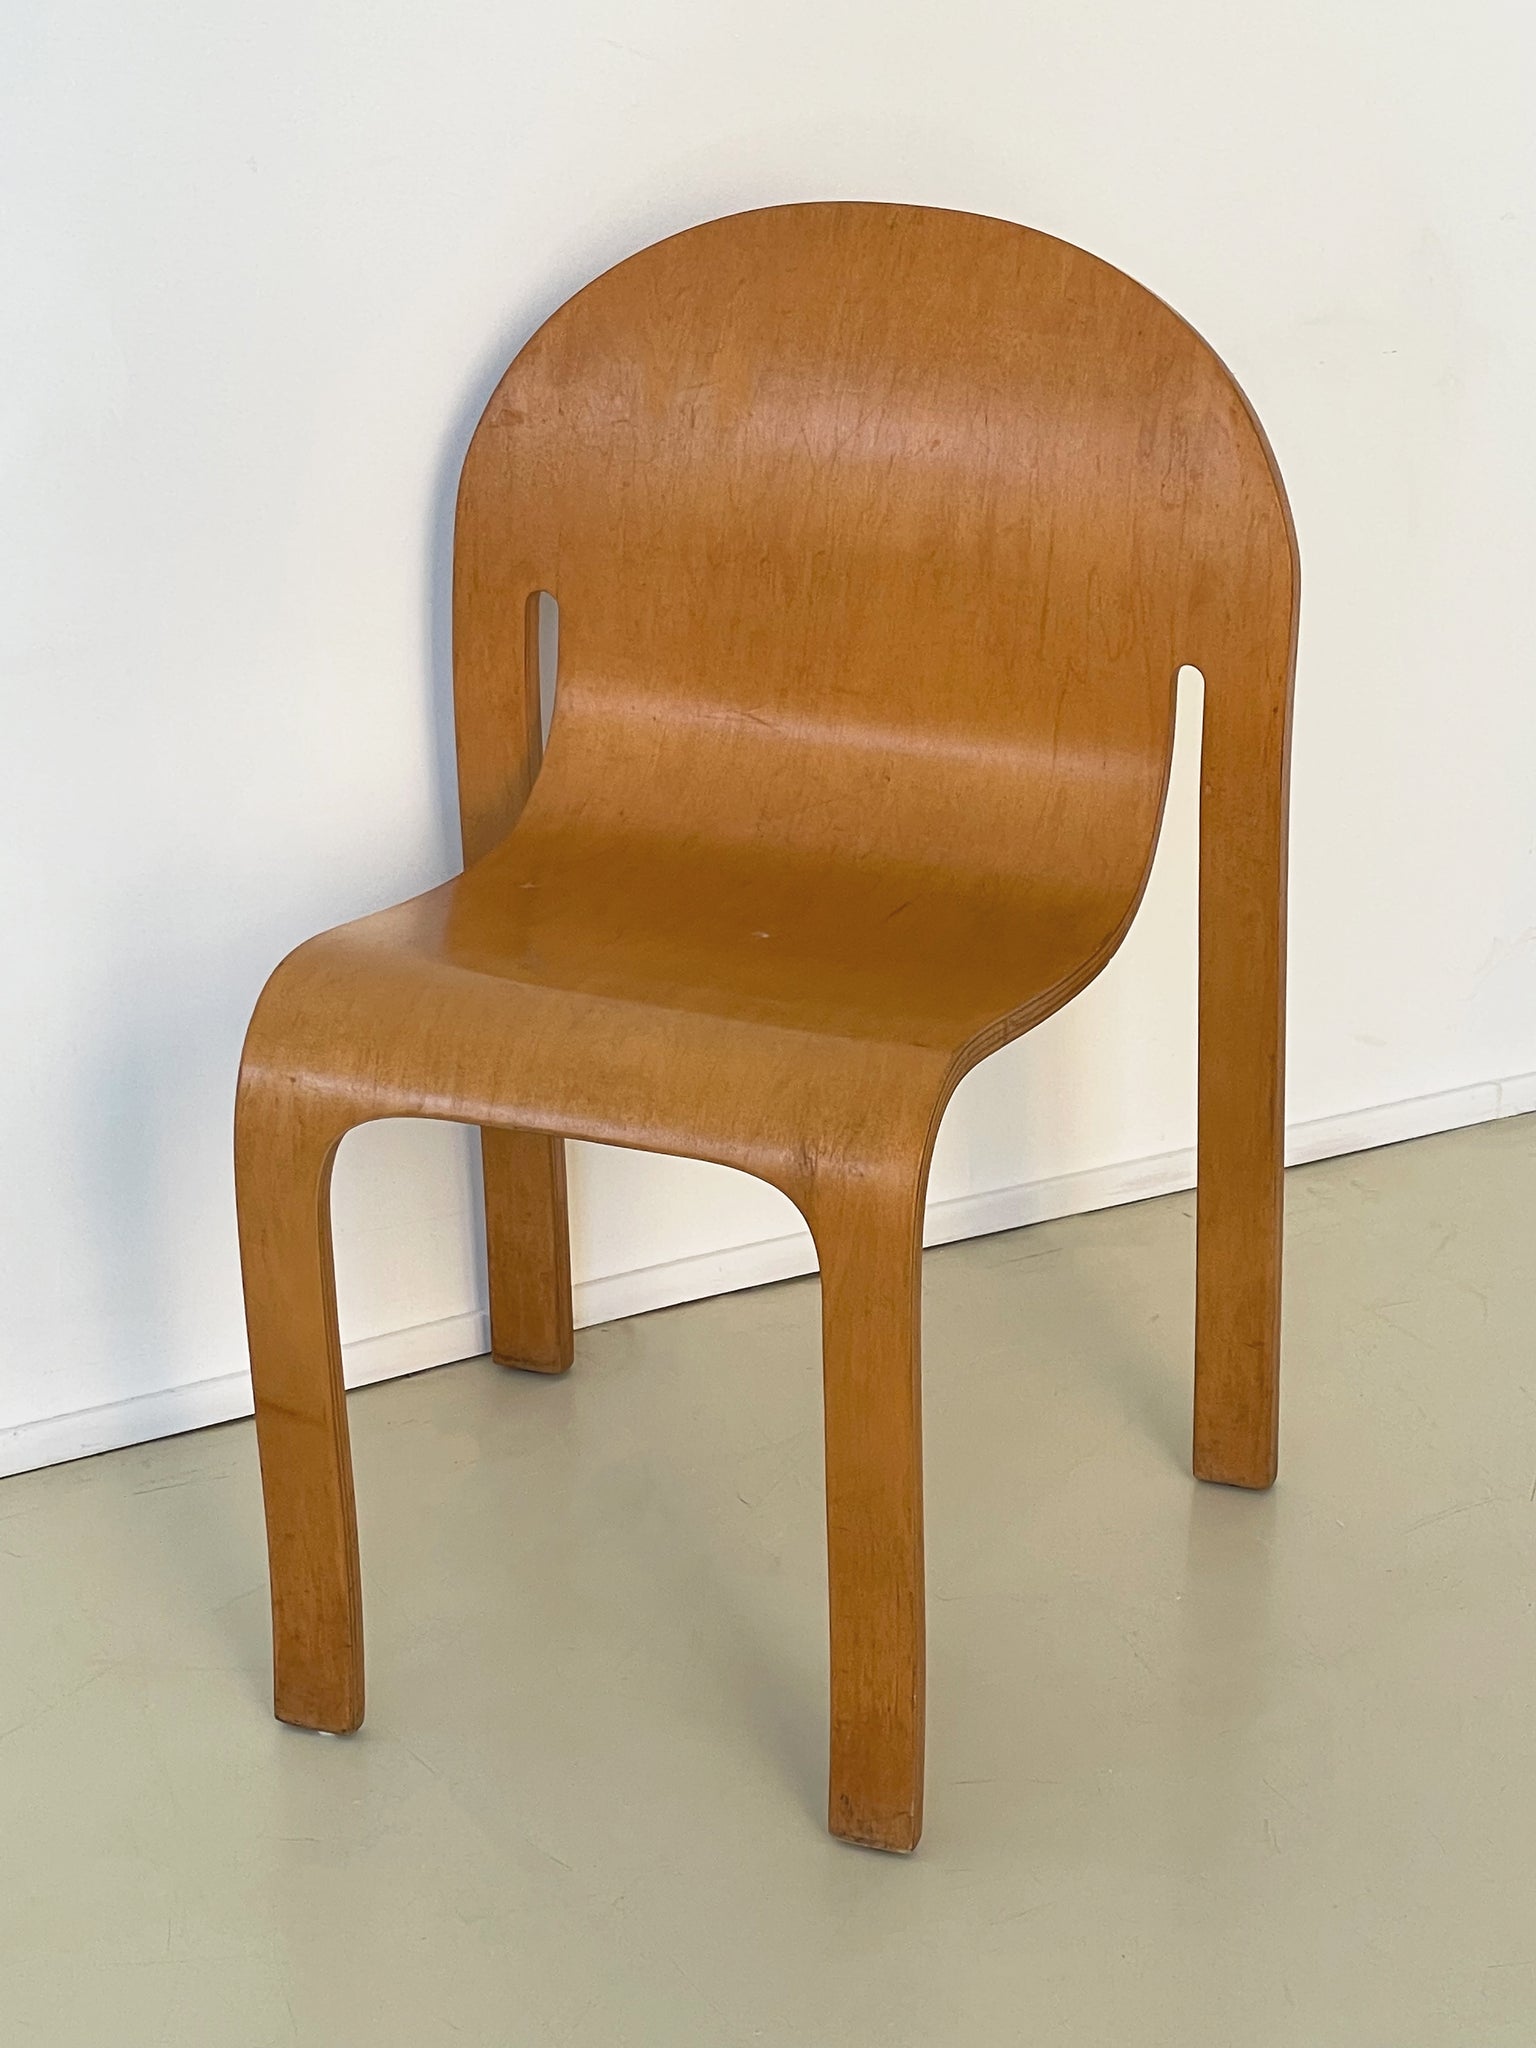 Post Modern Bent Plywood Bodyform Chair by Peter Danko